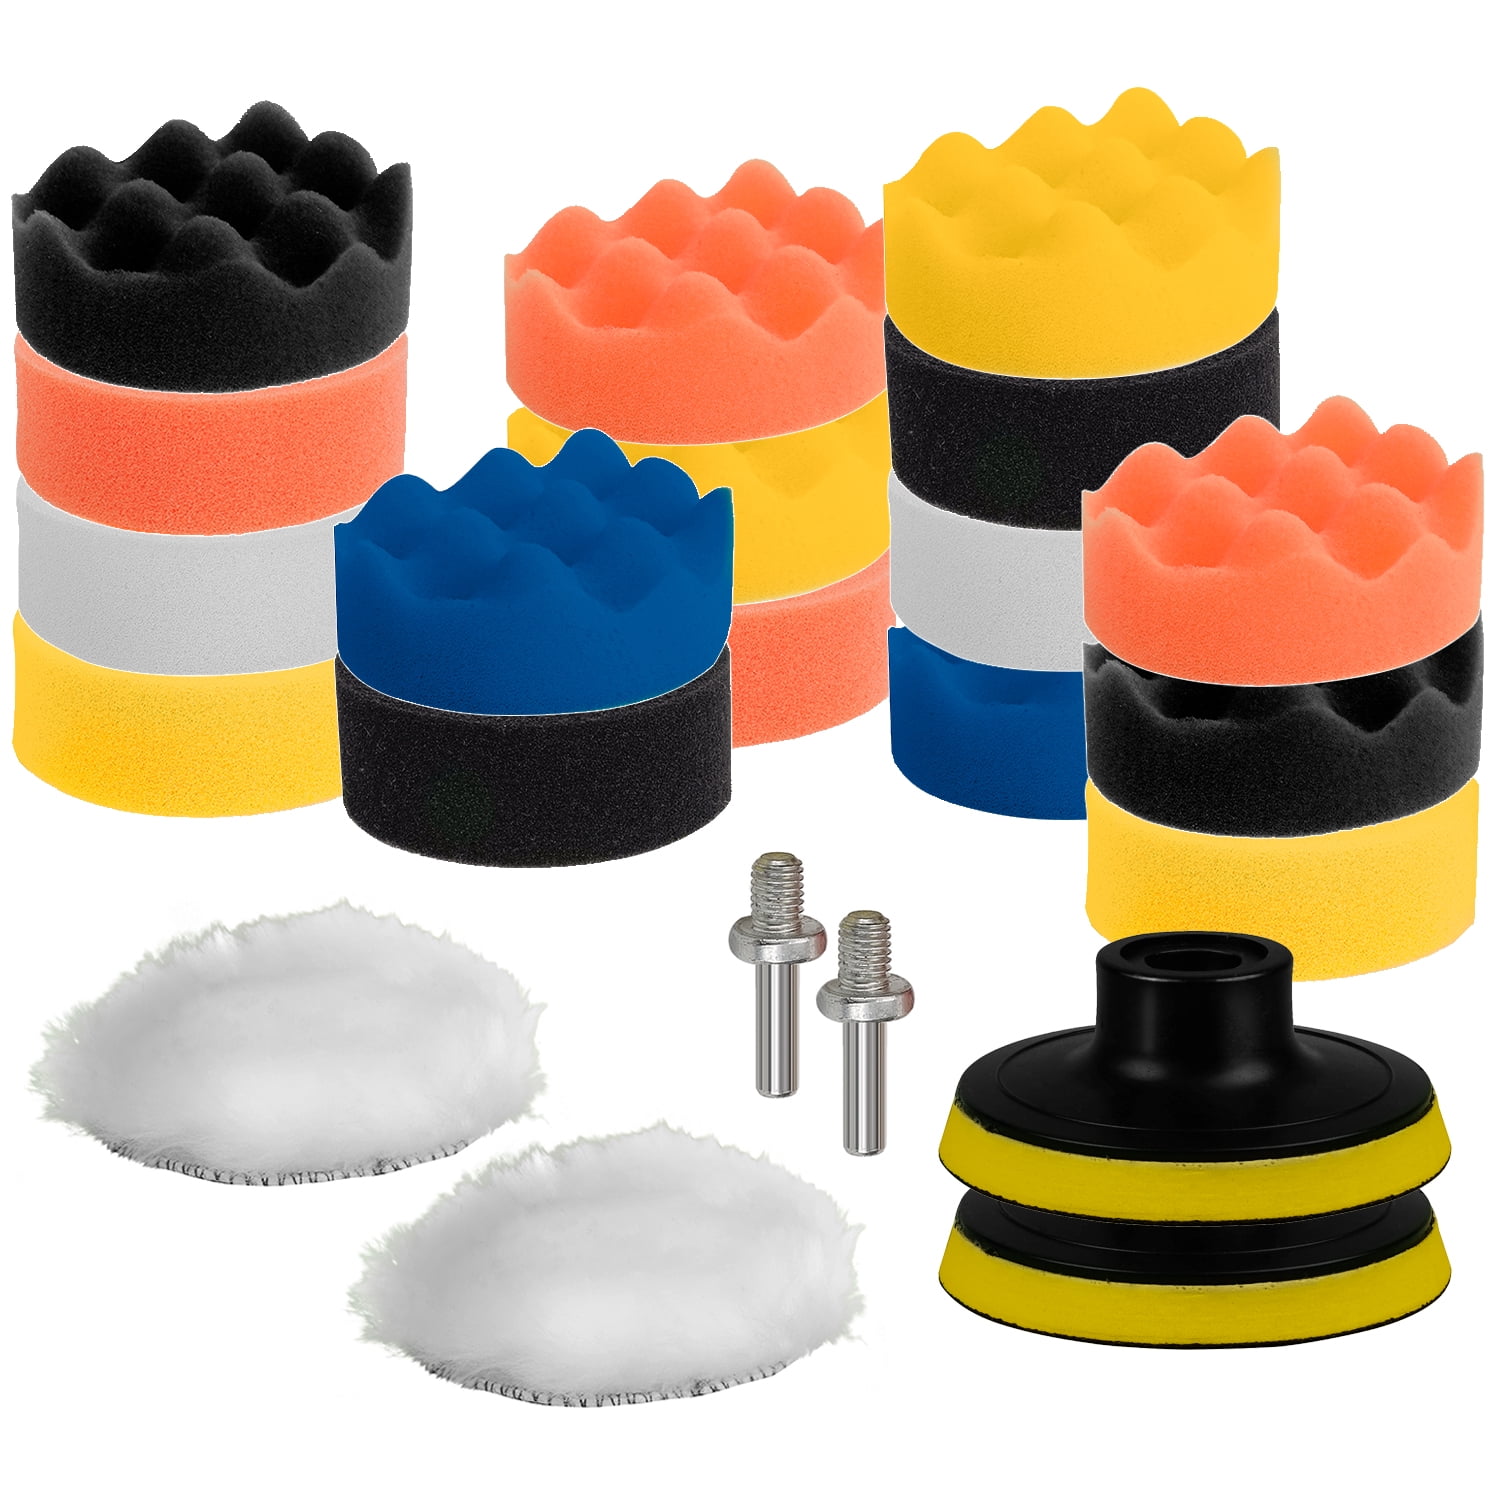 6PCS Car Wax Applicator Pads Kit- Car Detailing Tool for Waxing Kit Glaze  Sealant Liquid Paste Wax Ceramic Coating , Paint and Auto Part Accessories  